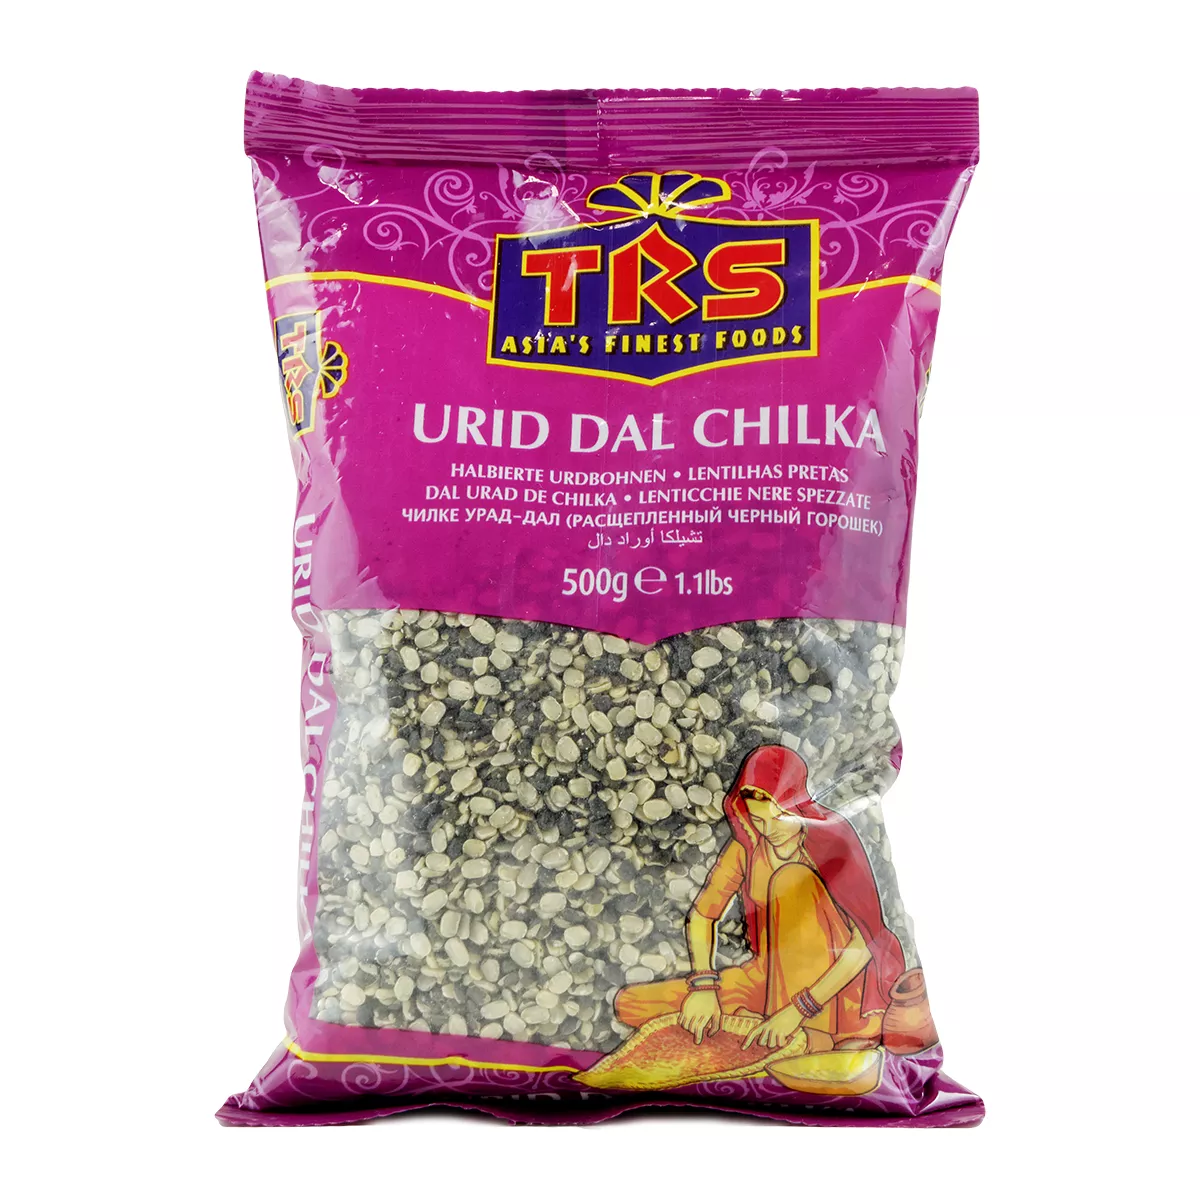 Urid Dal Chilka (linte neagra) TRS 500g, [],asianfood.ro